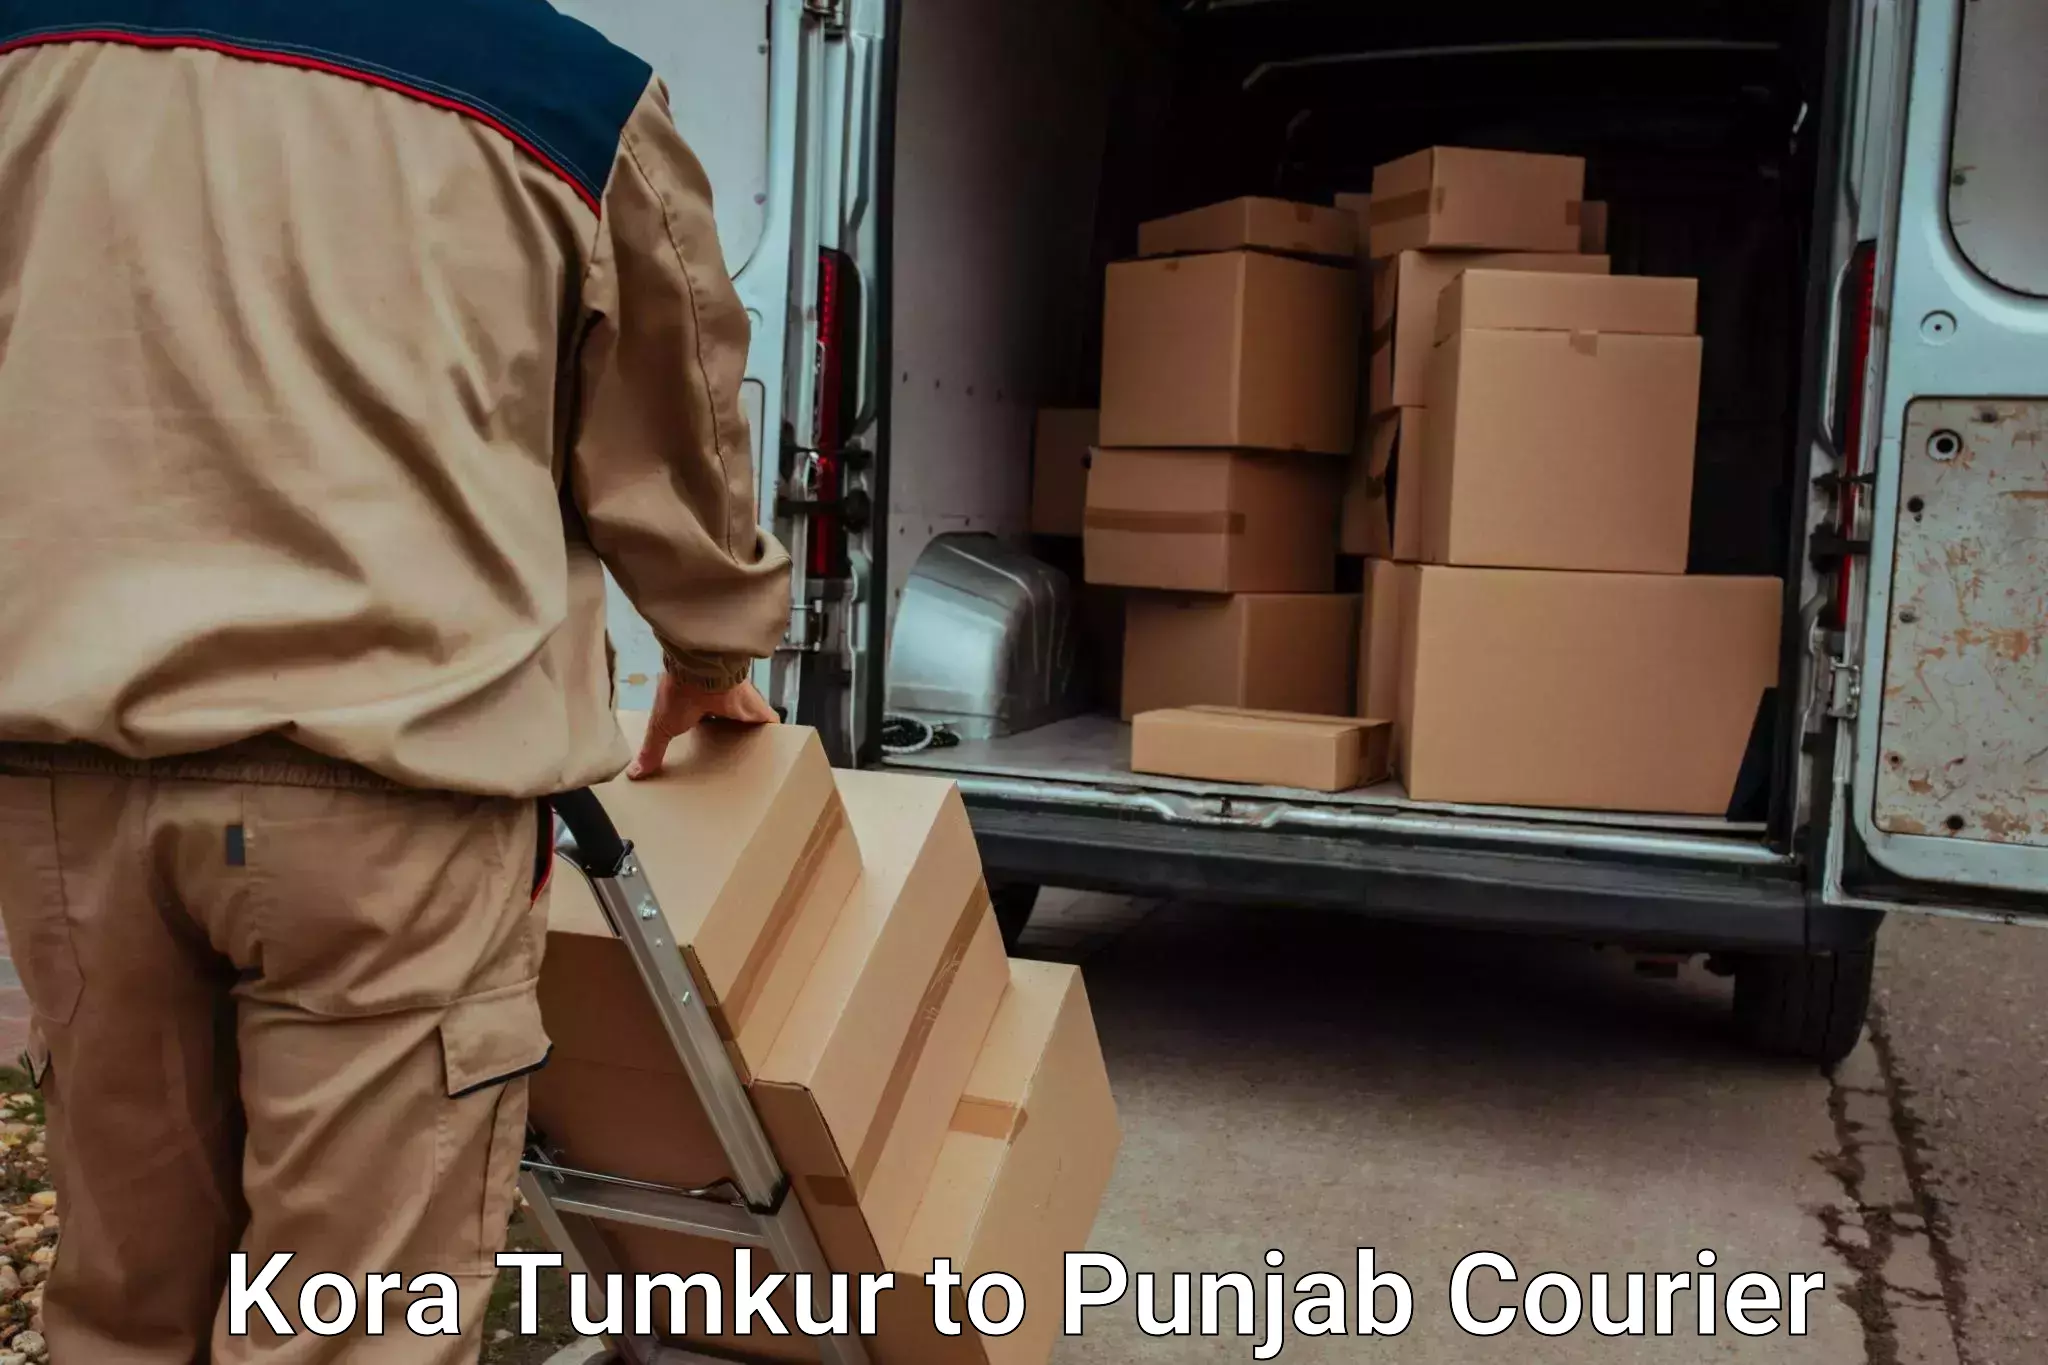 Moving and packing experts Kora Tumkur to Ludhiana